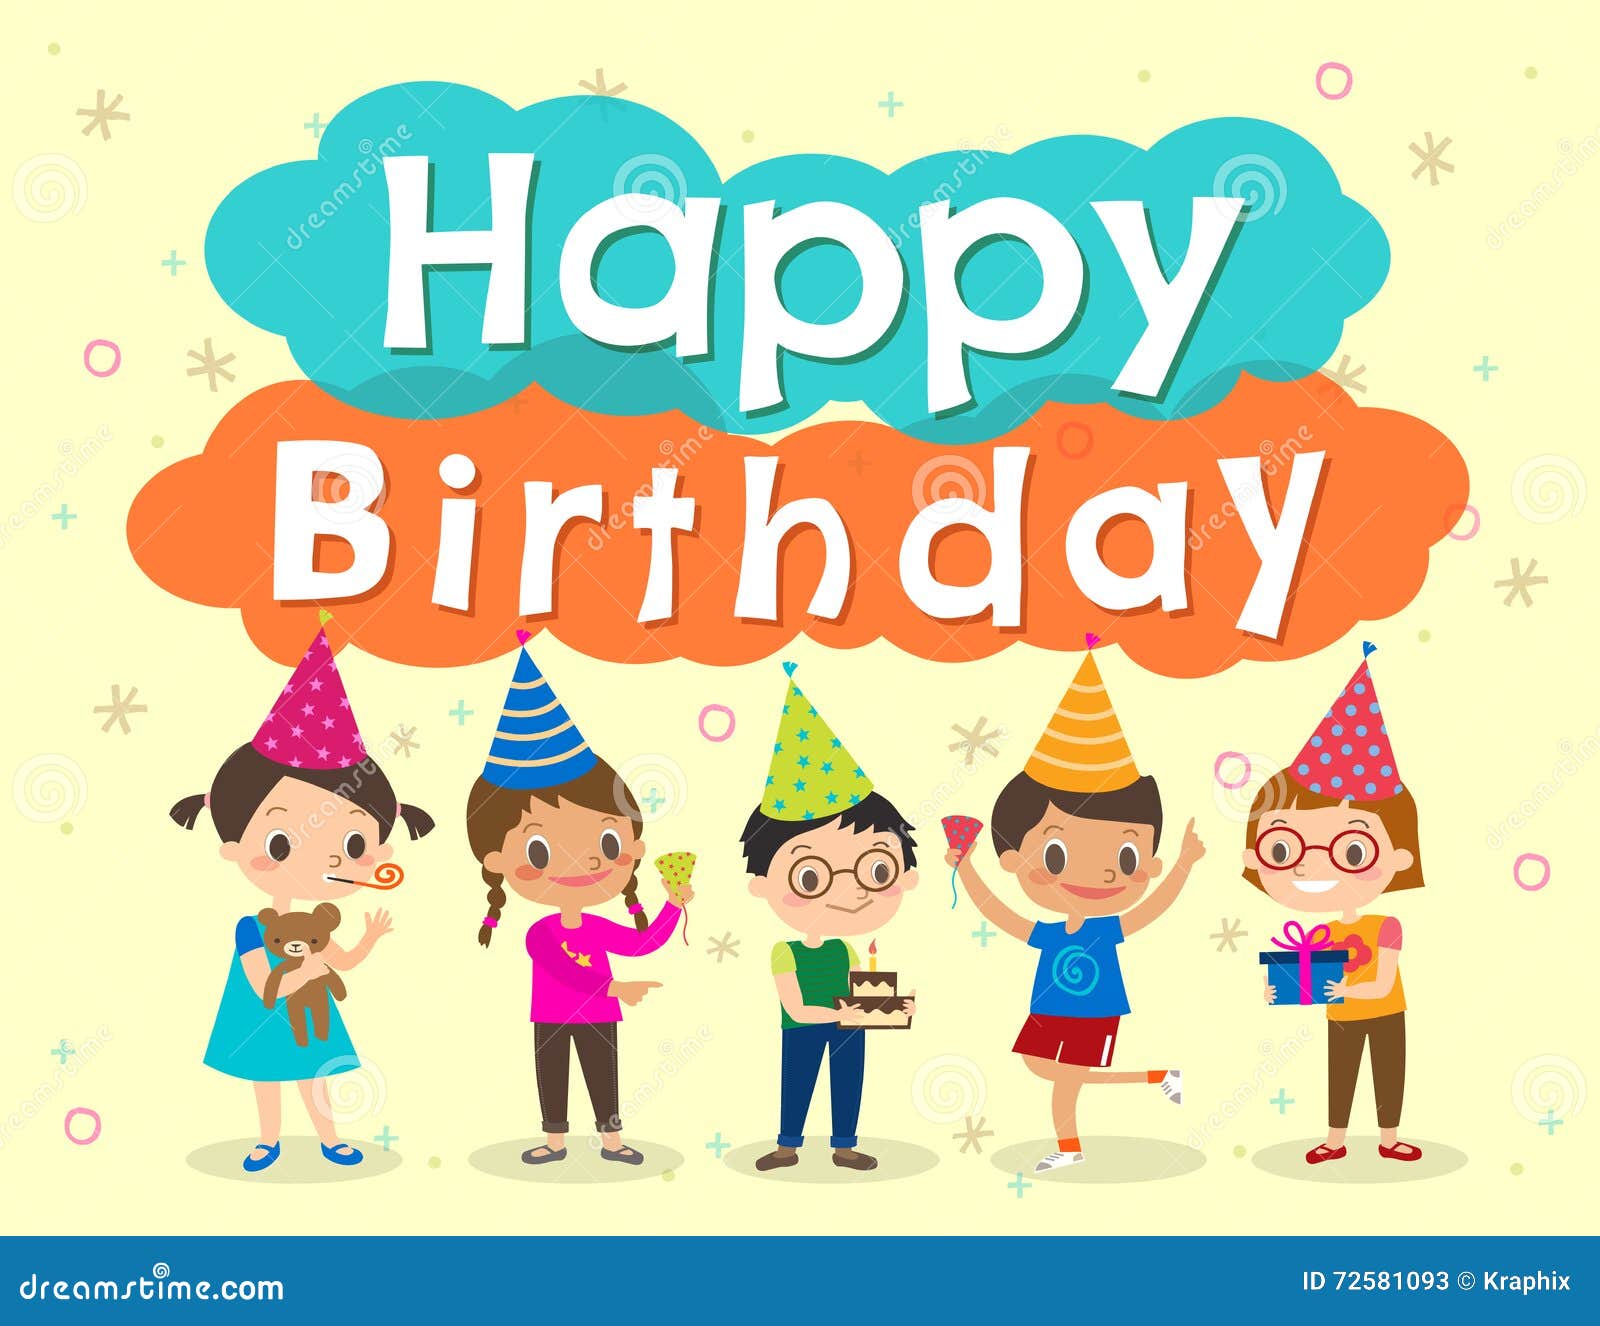 Happy Birthday Party Kids Cartoon Design Template Stock Vector ...